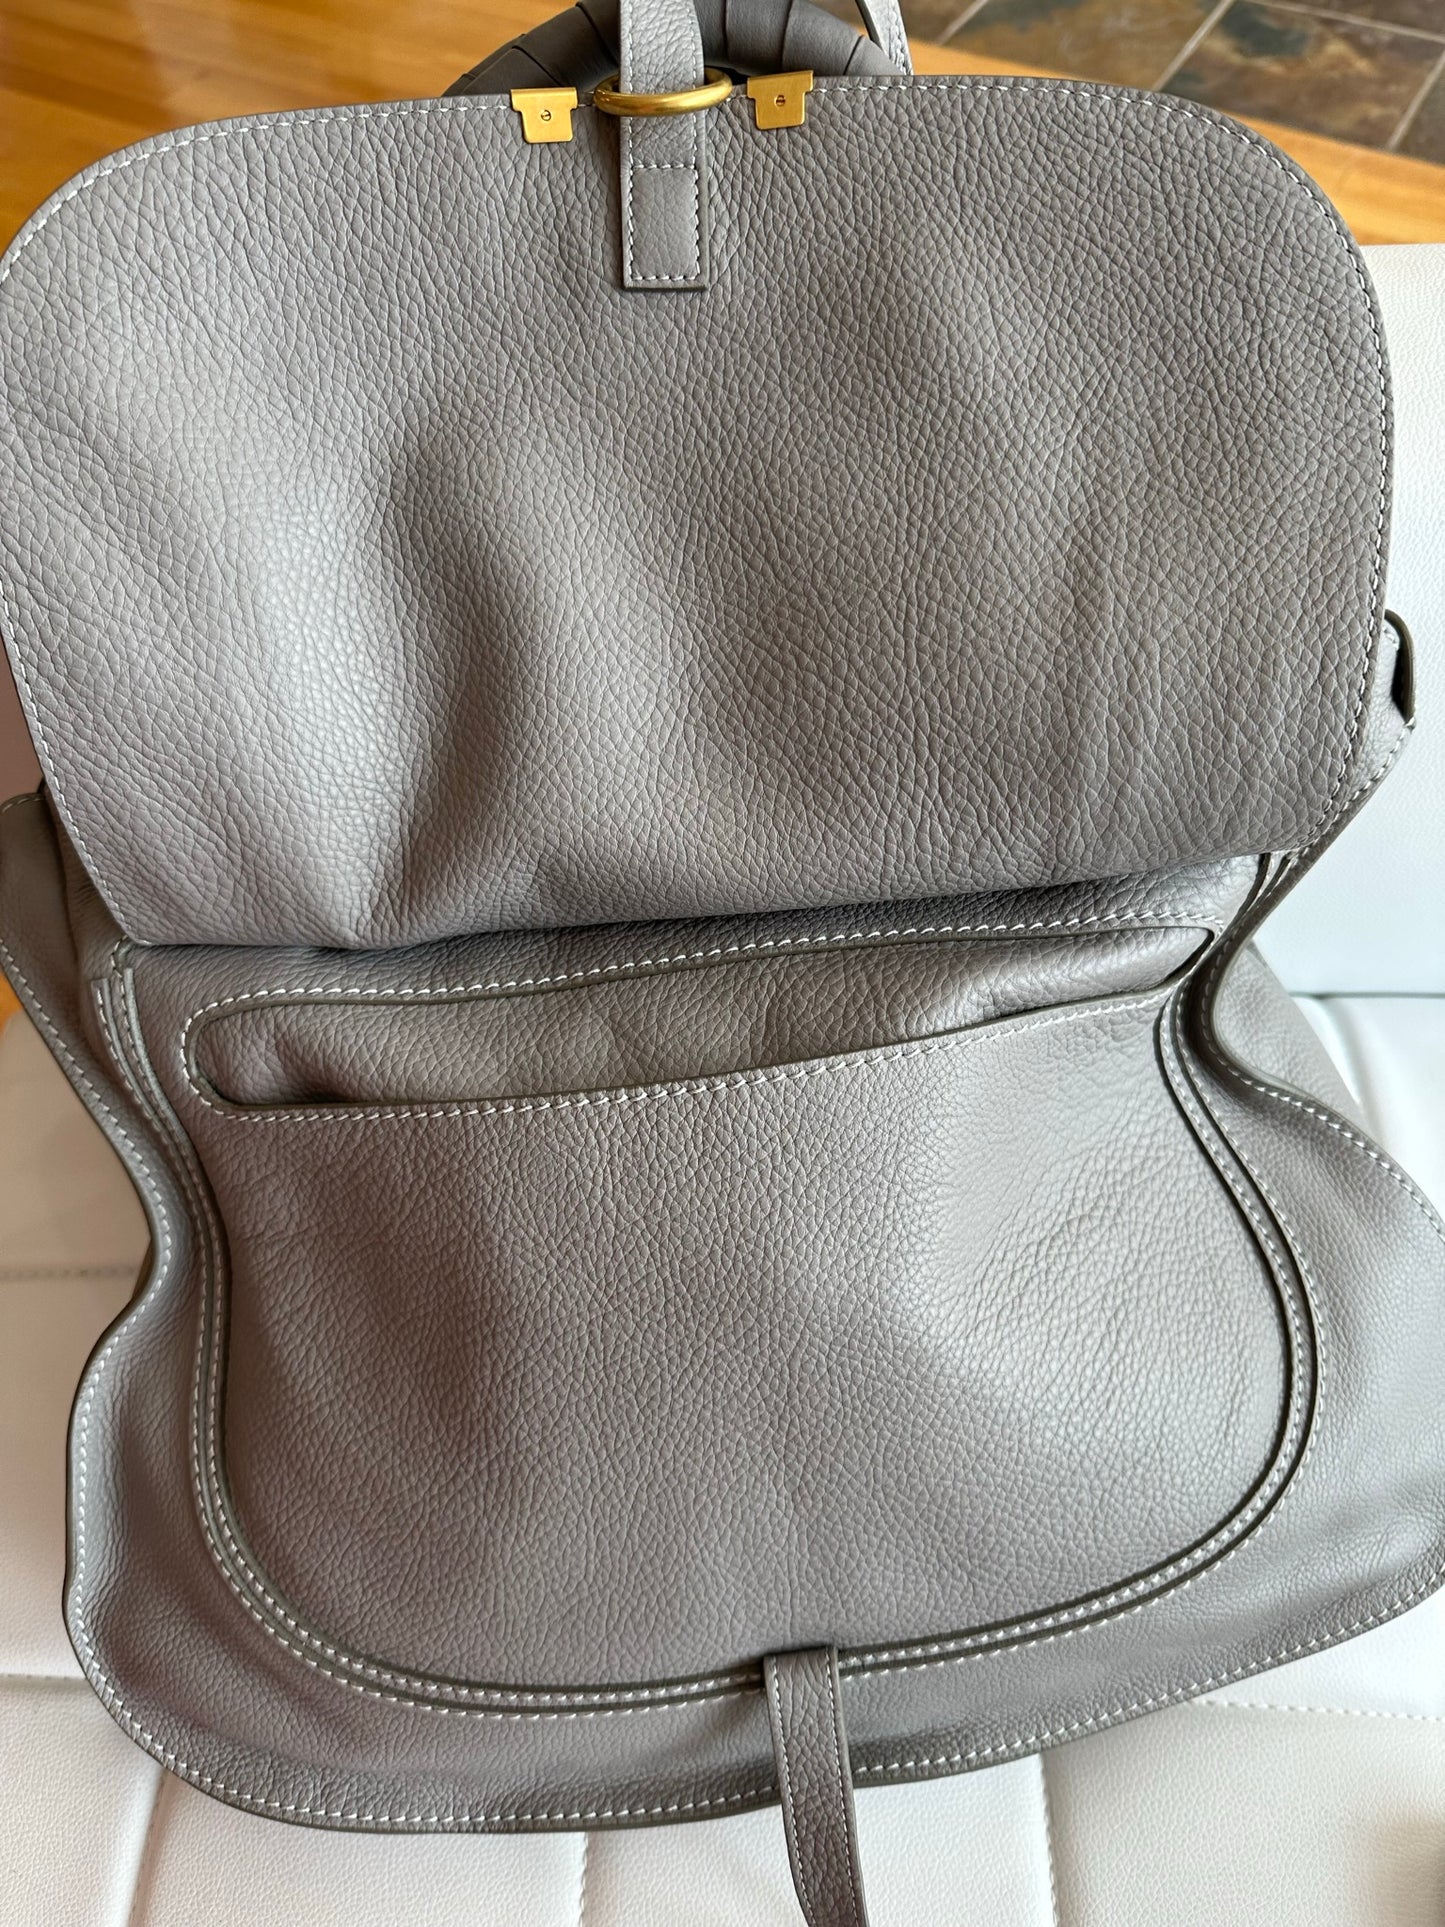 Chloe cashmere grey large Marcie bag like new satchel purse